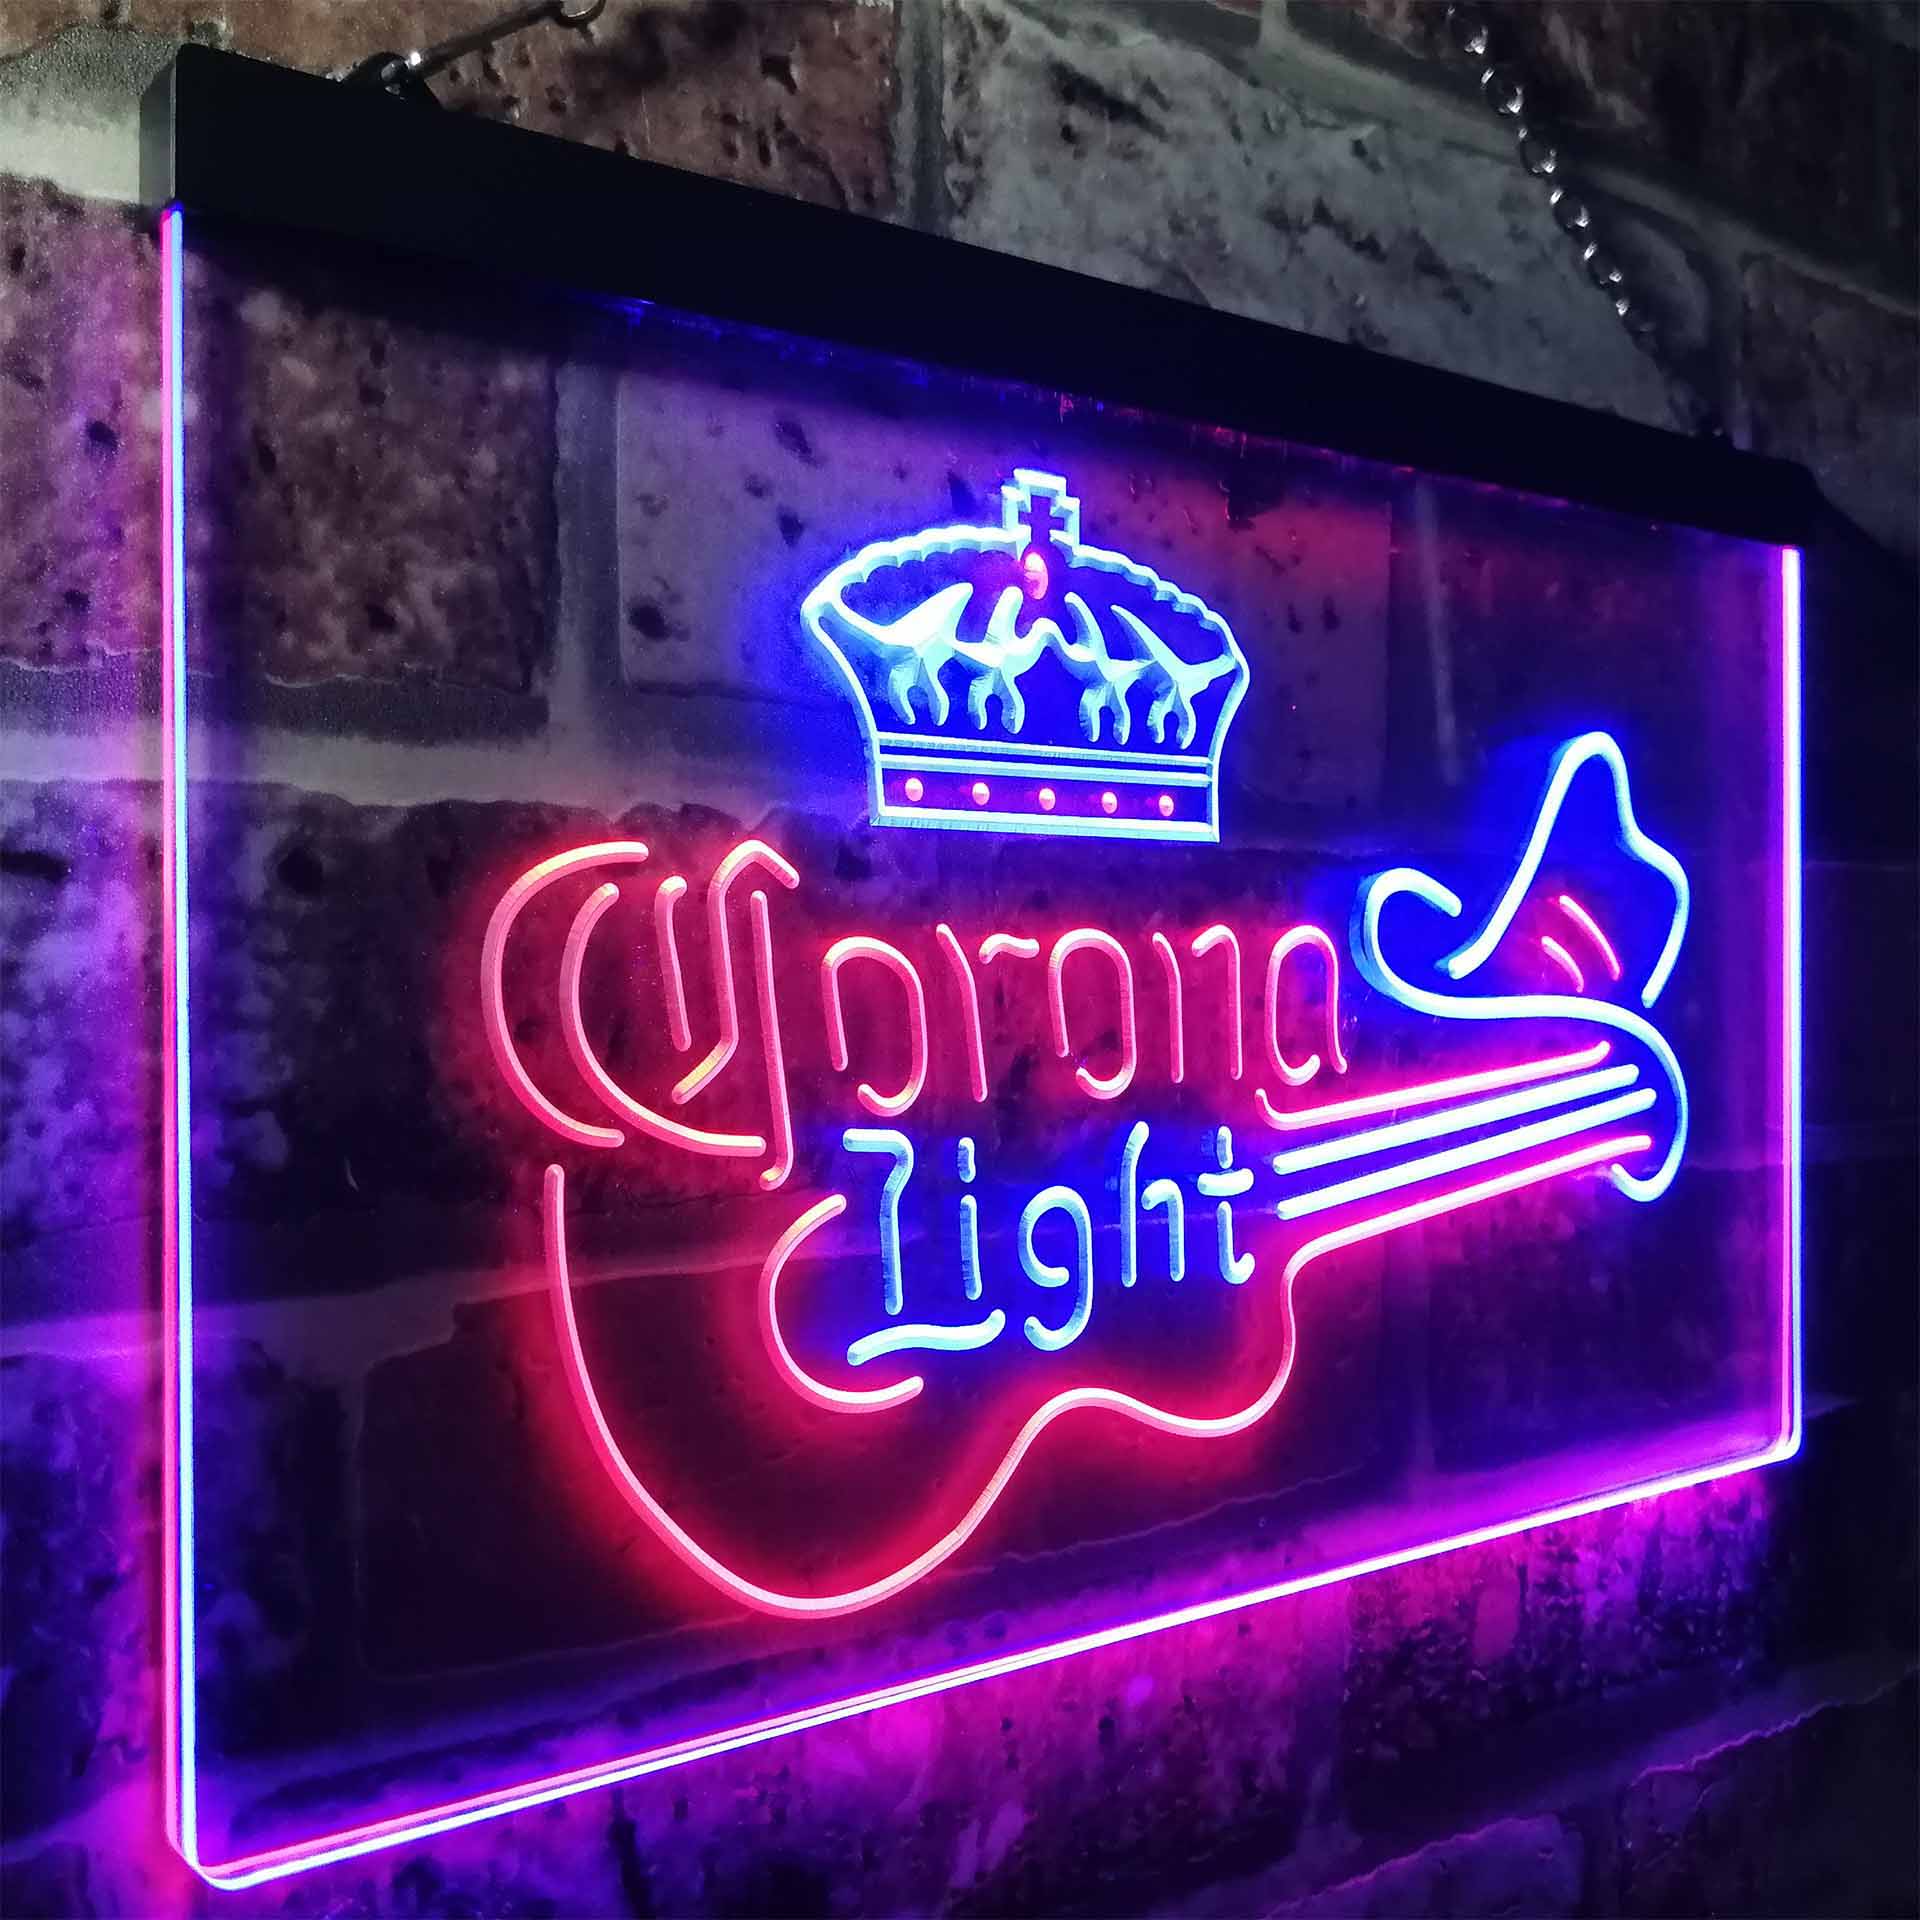 Coronas Light Guitar Cowboy Hat LED Neon Sign